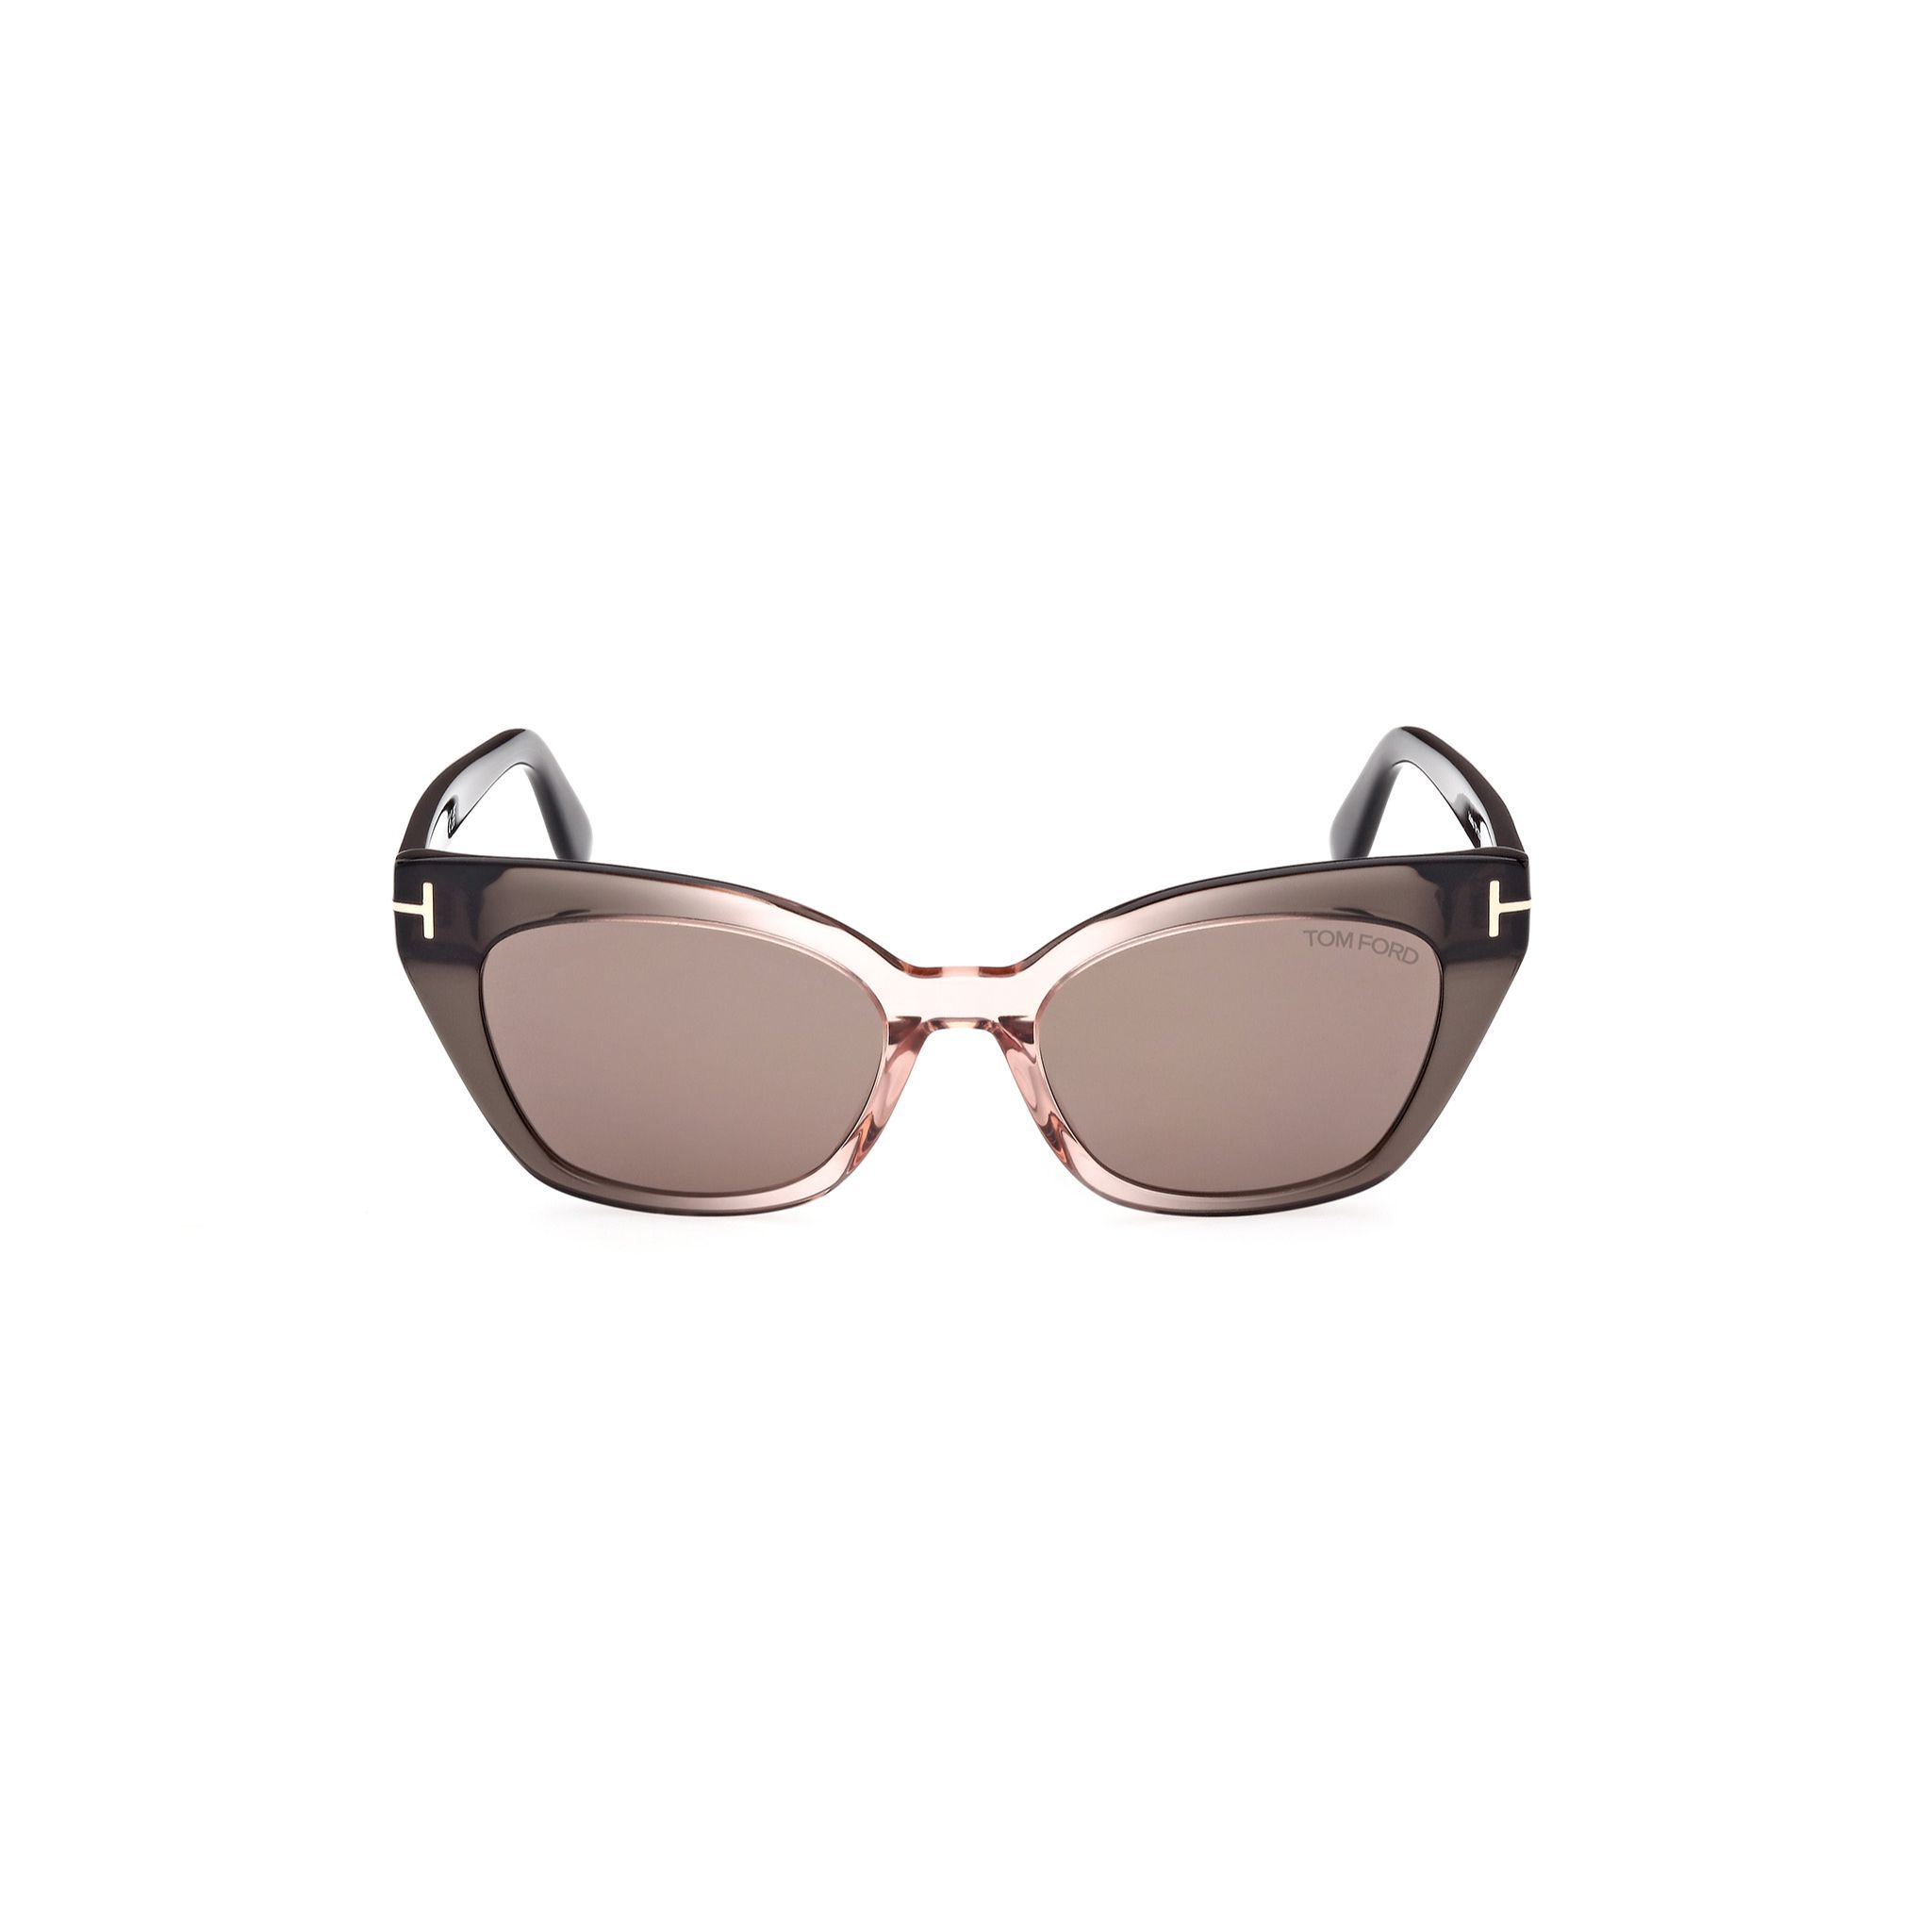 FT1031 Cateye Sunglasses 20J - size 52